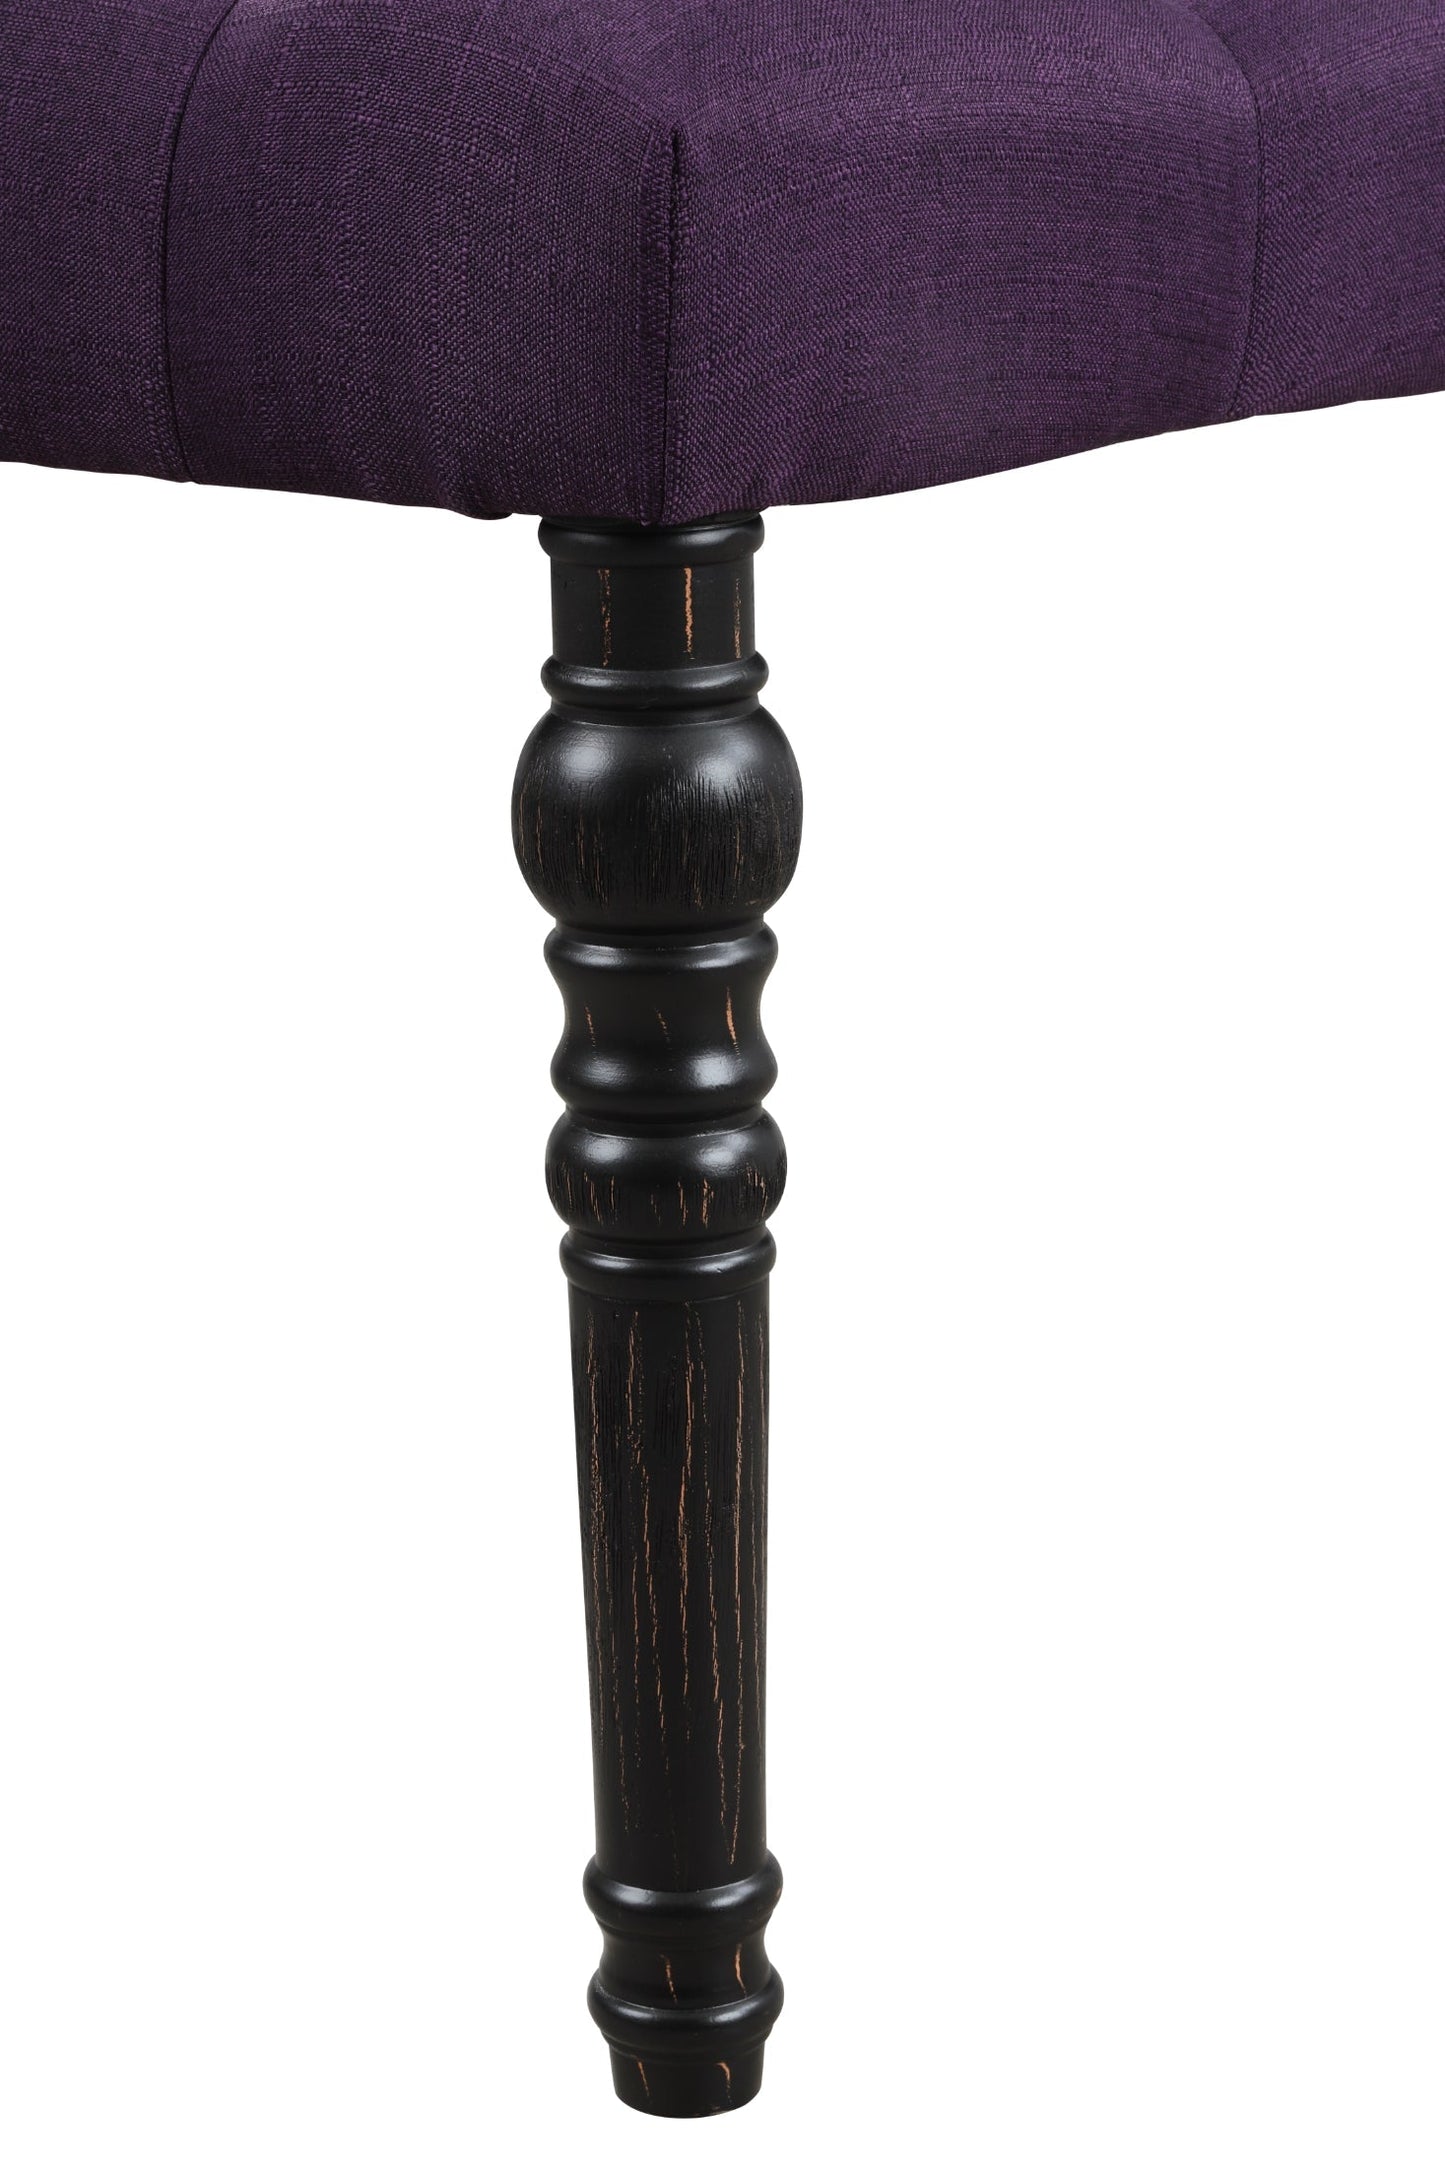 Leviton Fabric Tufted Turned Leg Dining Bench, Purple